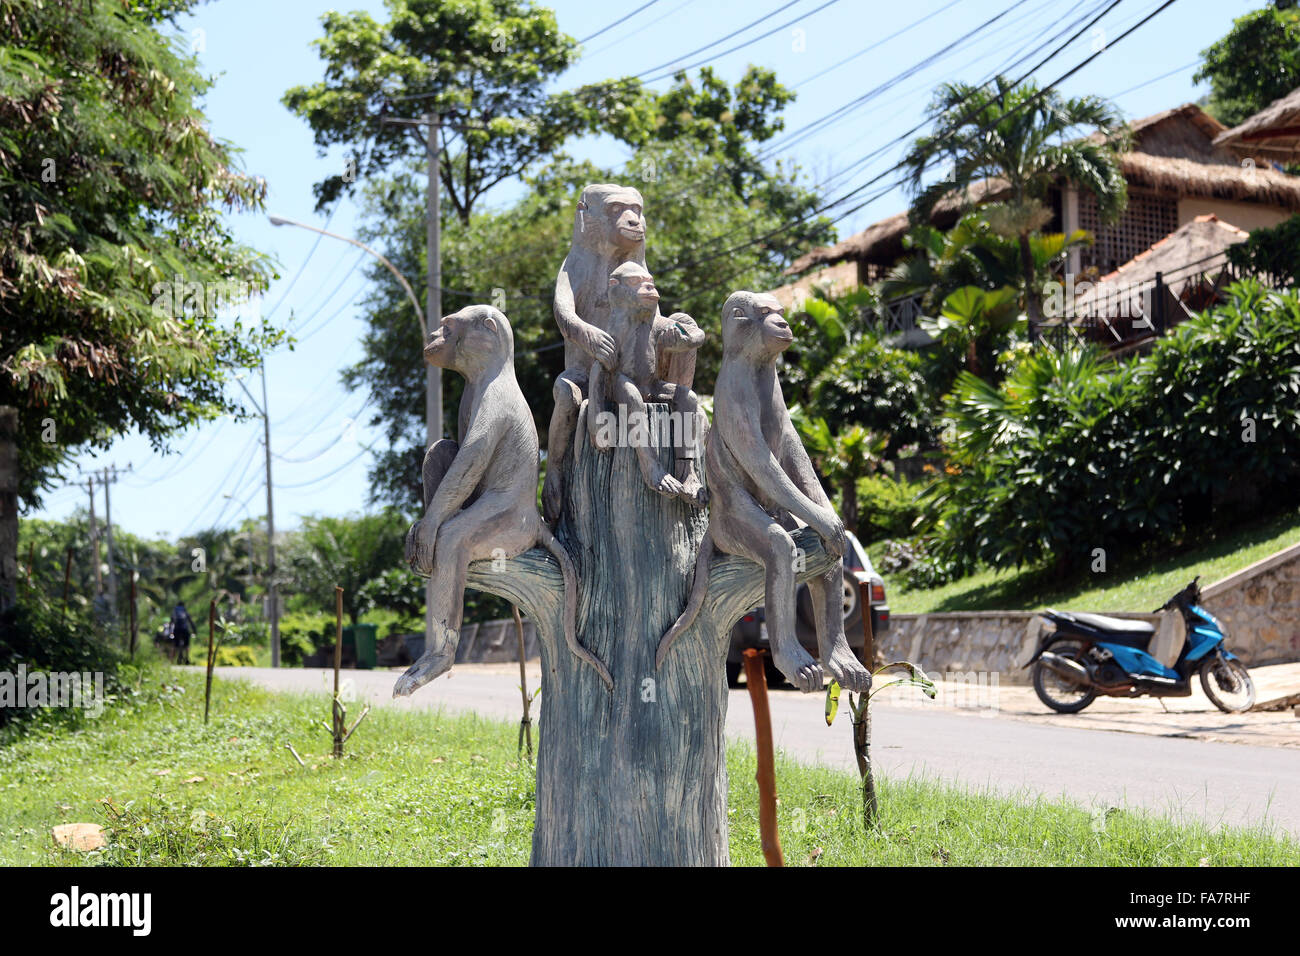 Kep Cambodge statue de singe carving wood tree Banque D'Images